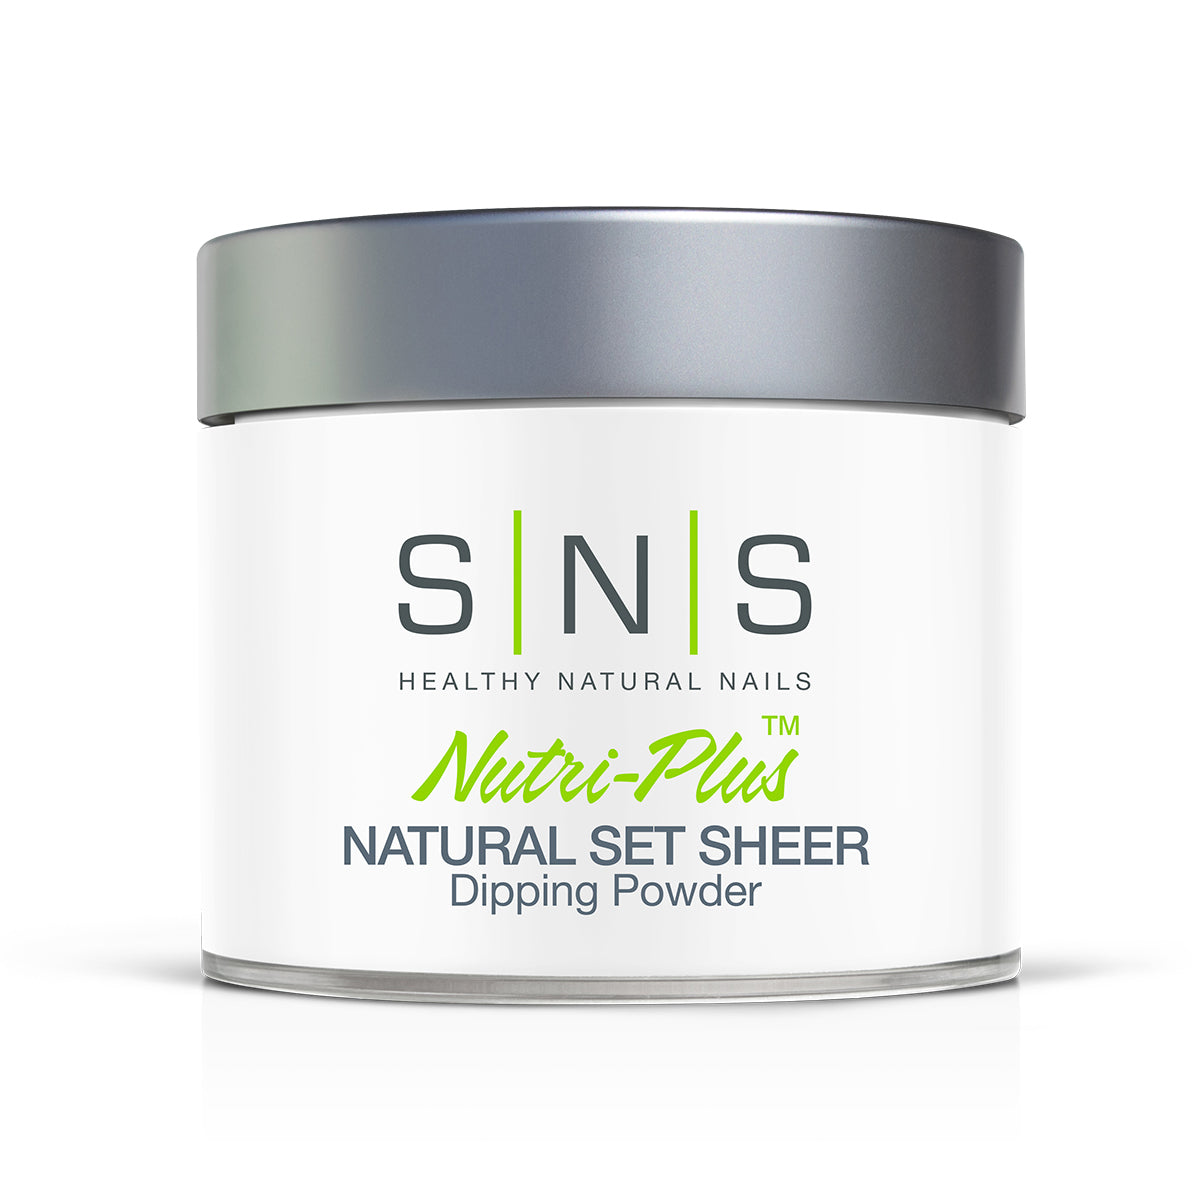 SNS Nutri-Plus French Dipping Powder Natural Set Sheer 113g packaging